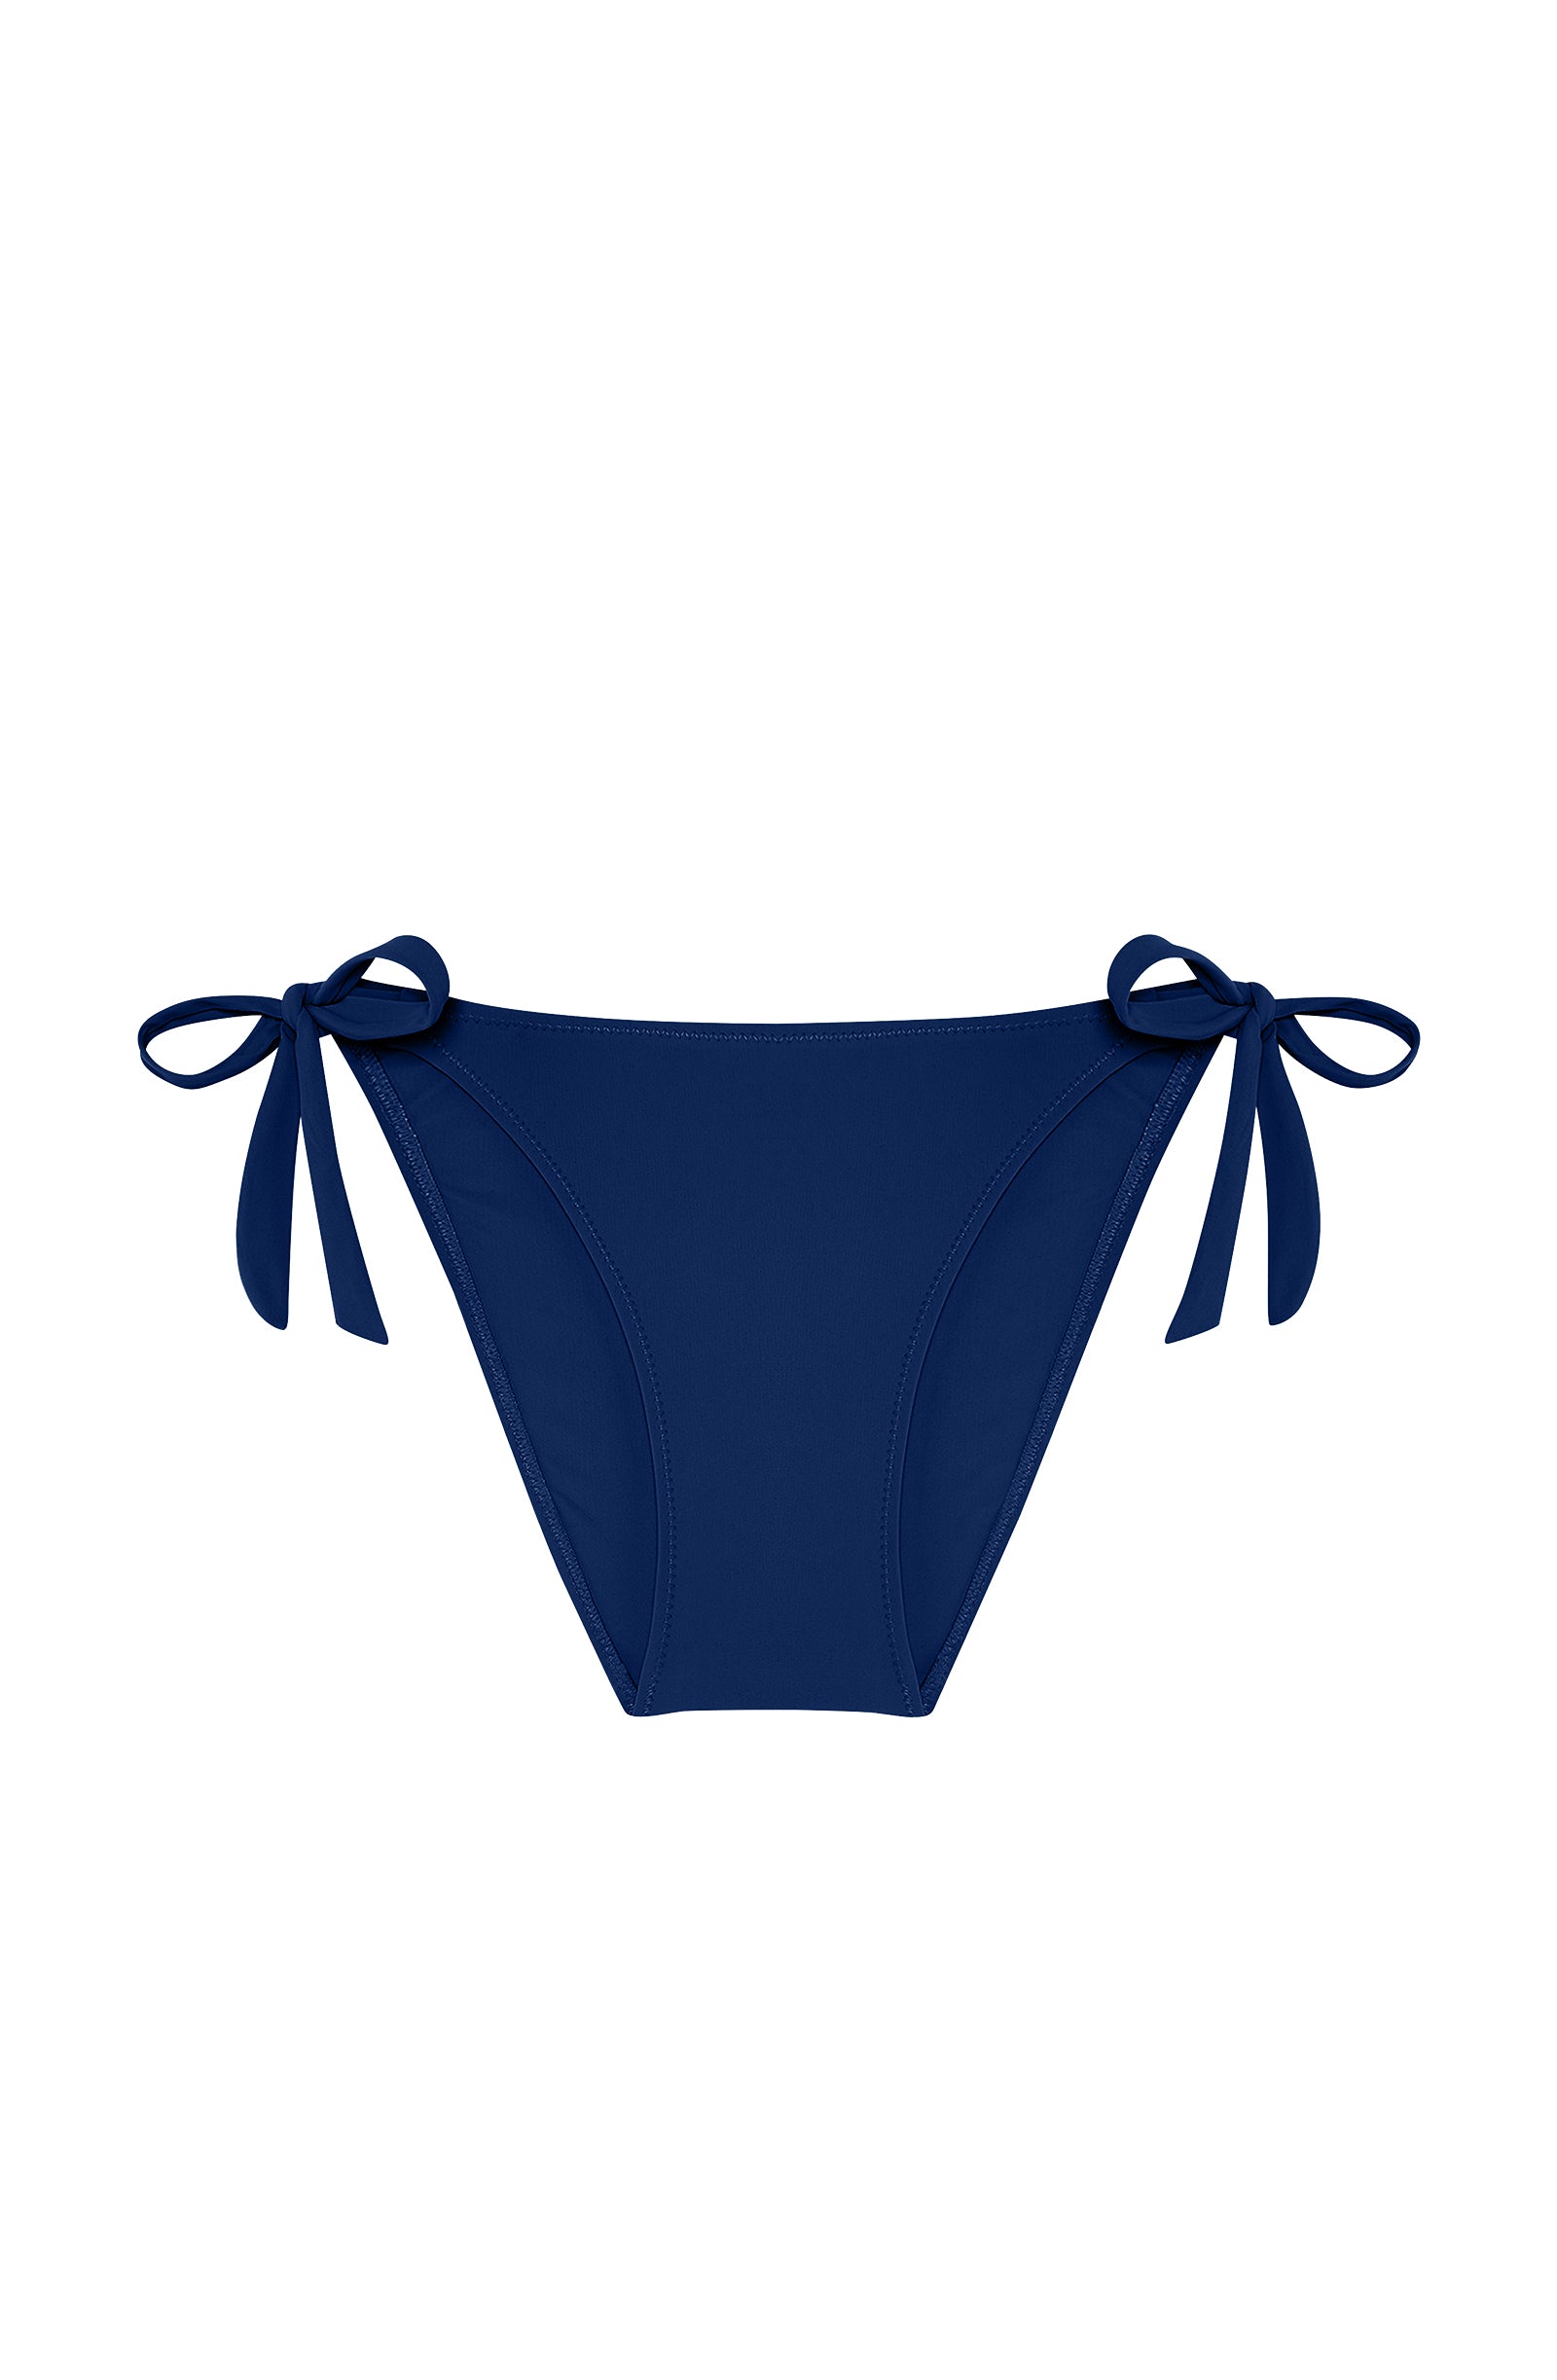 onyx - Midnight bikini bottoms with adjustable ties - Pain de Sucre UK